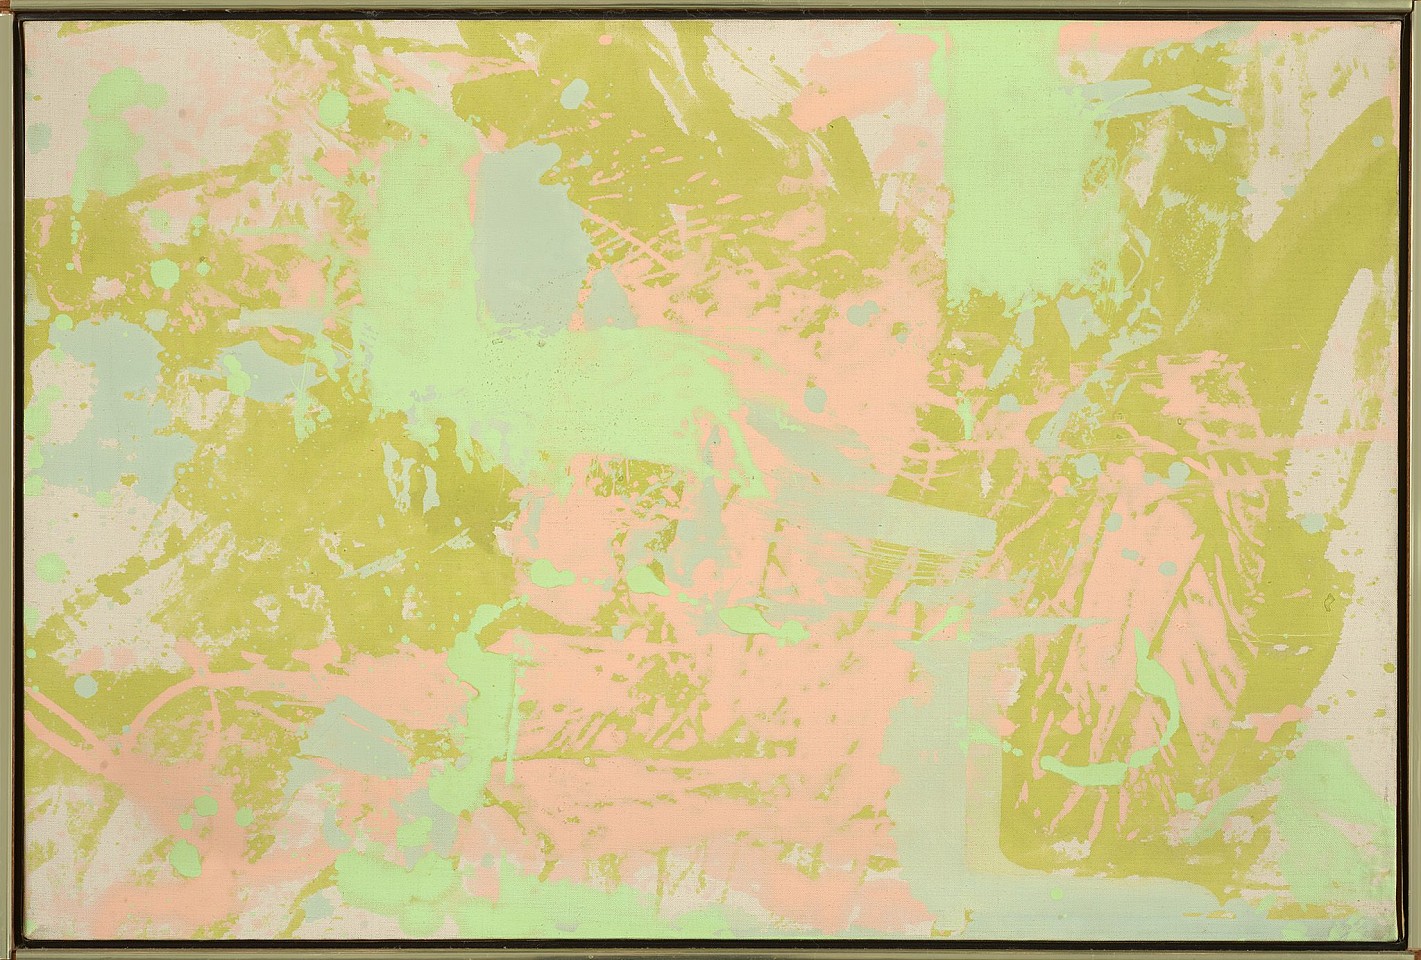 Walter Darby Bannard, China Spring #2, 1969
Acrylic on canvas, 20 x 30 in. (50.8 x 76.2 cm)
BAN-00217